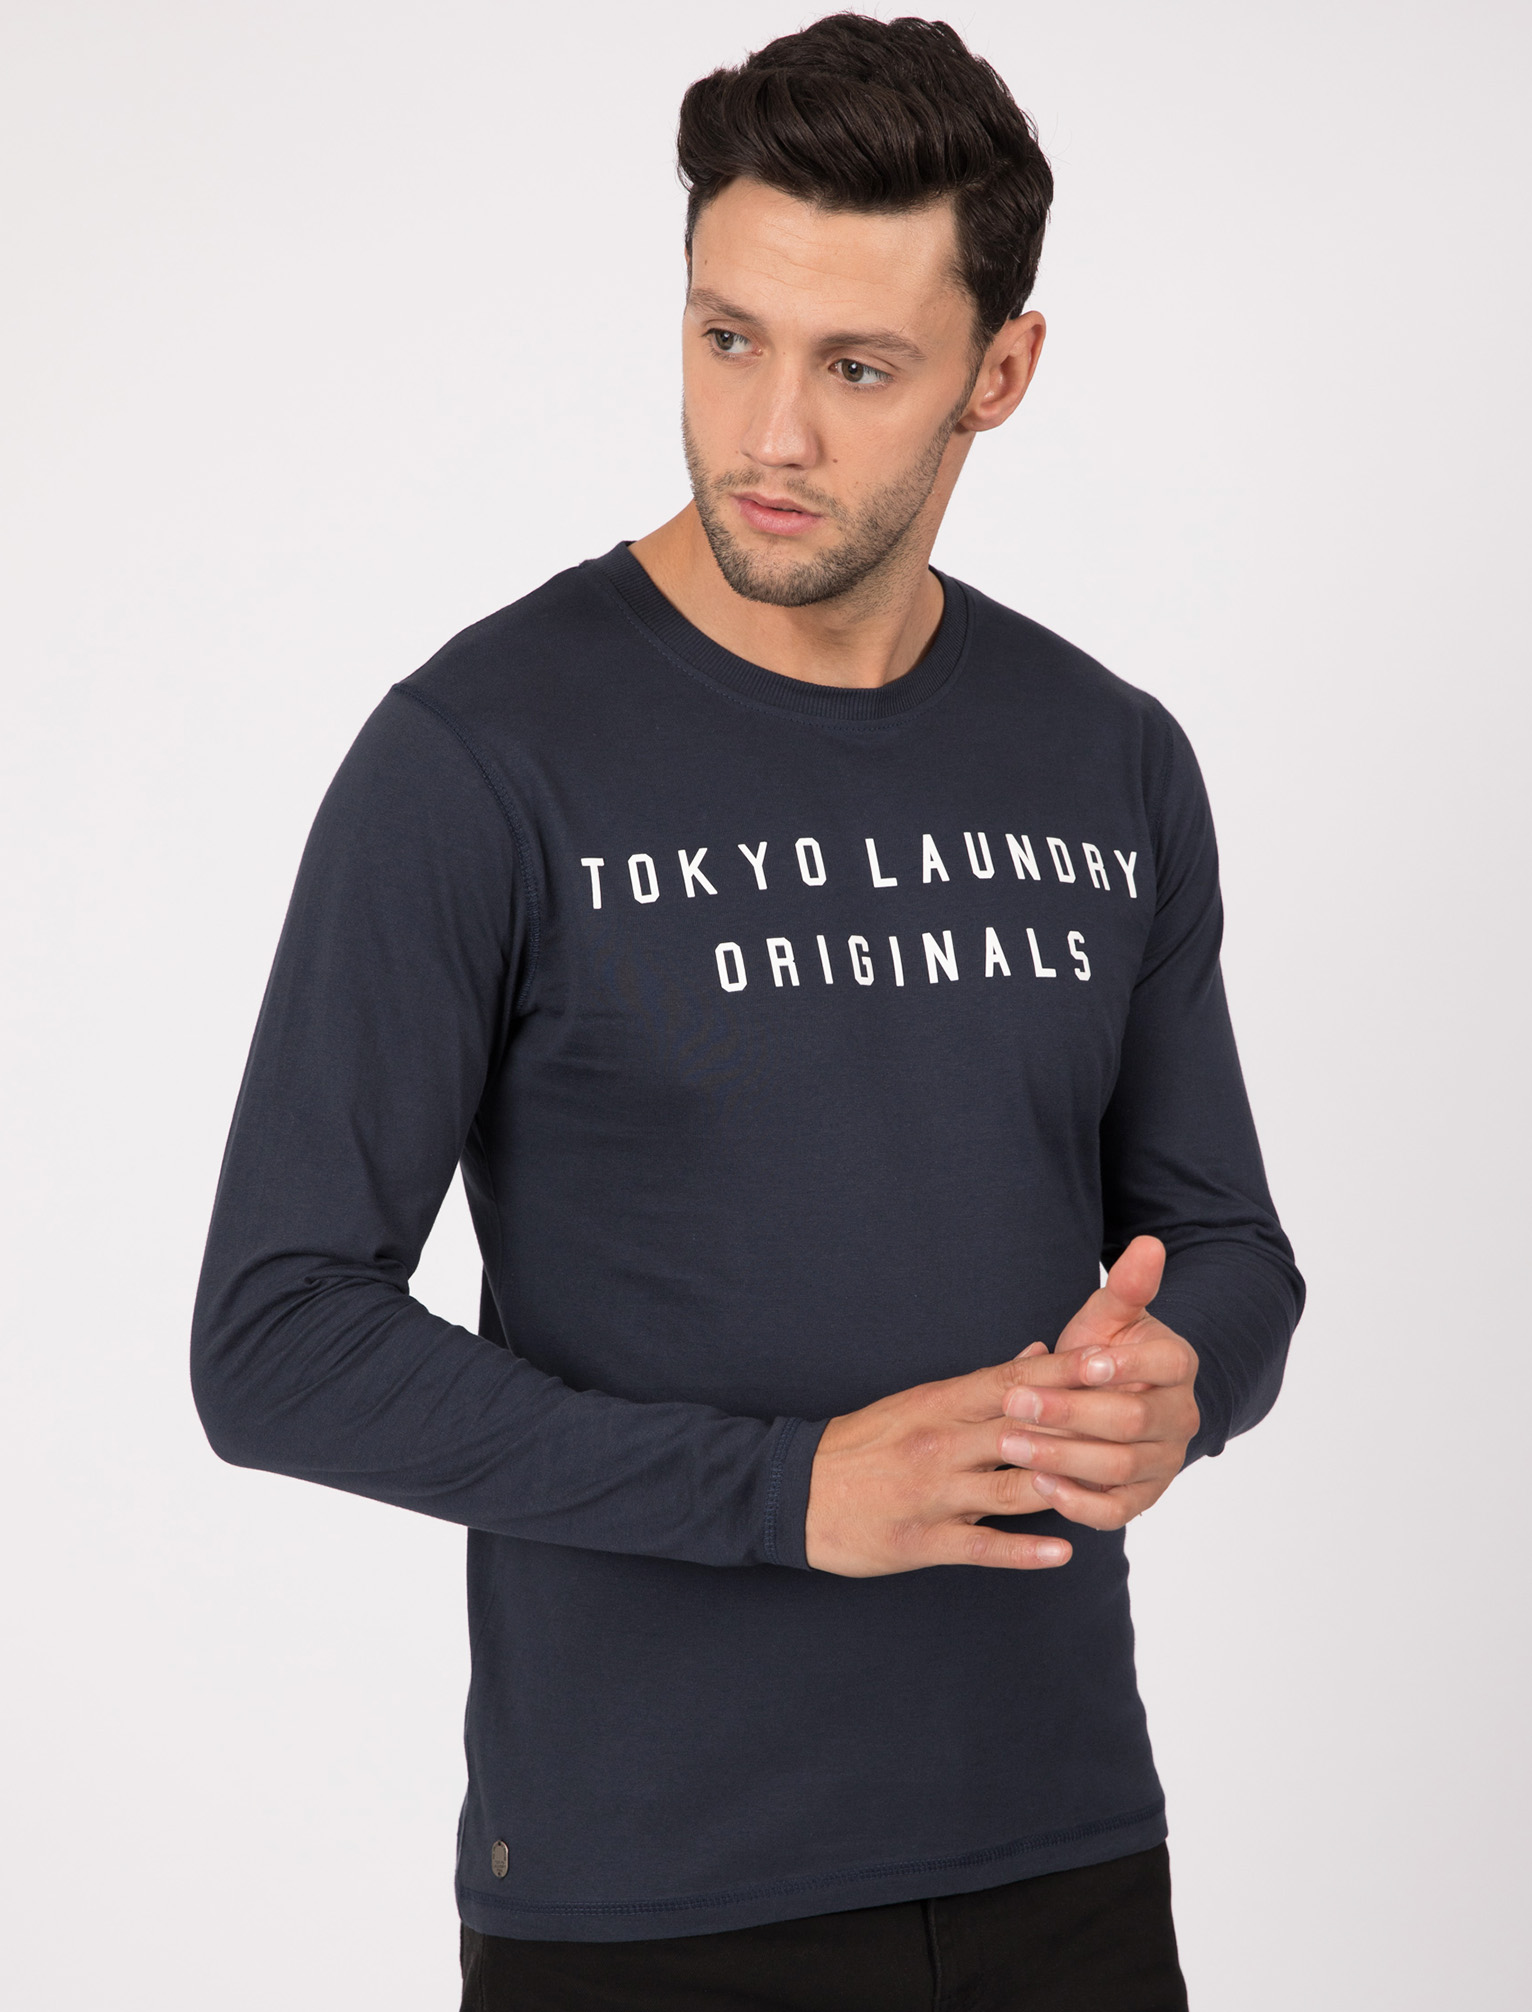 Tokyo Laundry Men's Edison Long Sleeve Cotton Casual T-Shirt Top | eBay